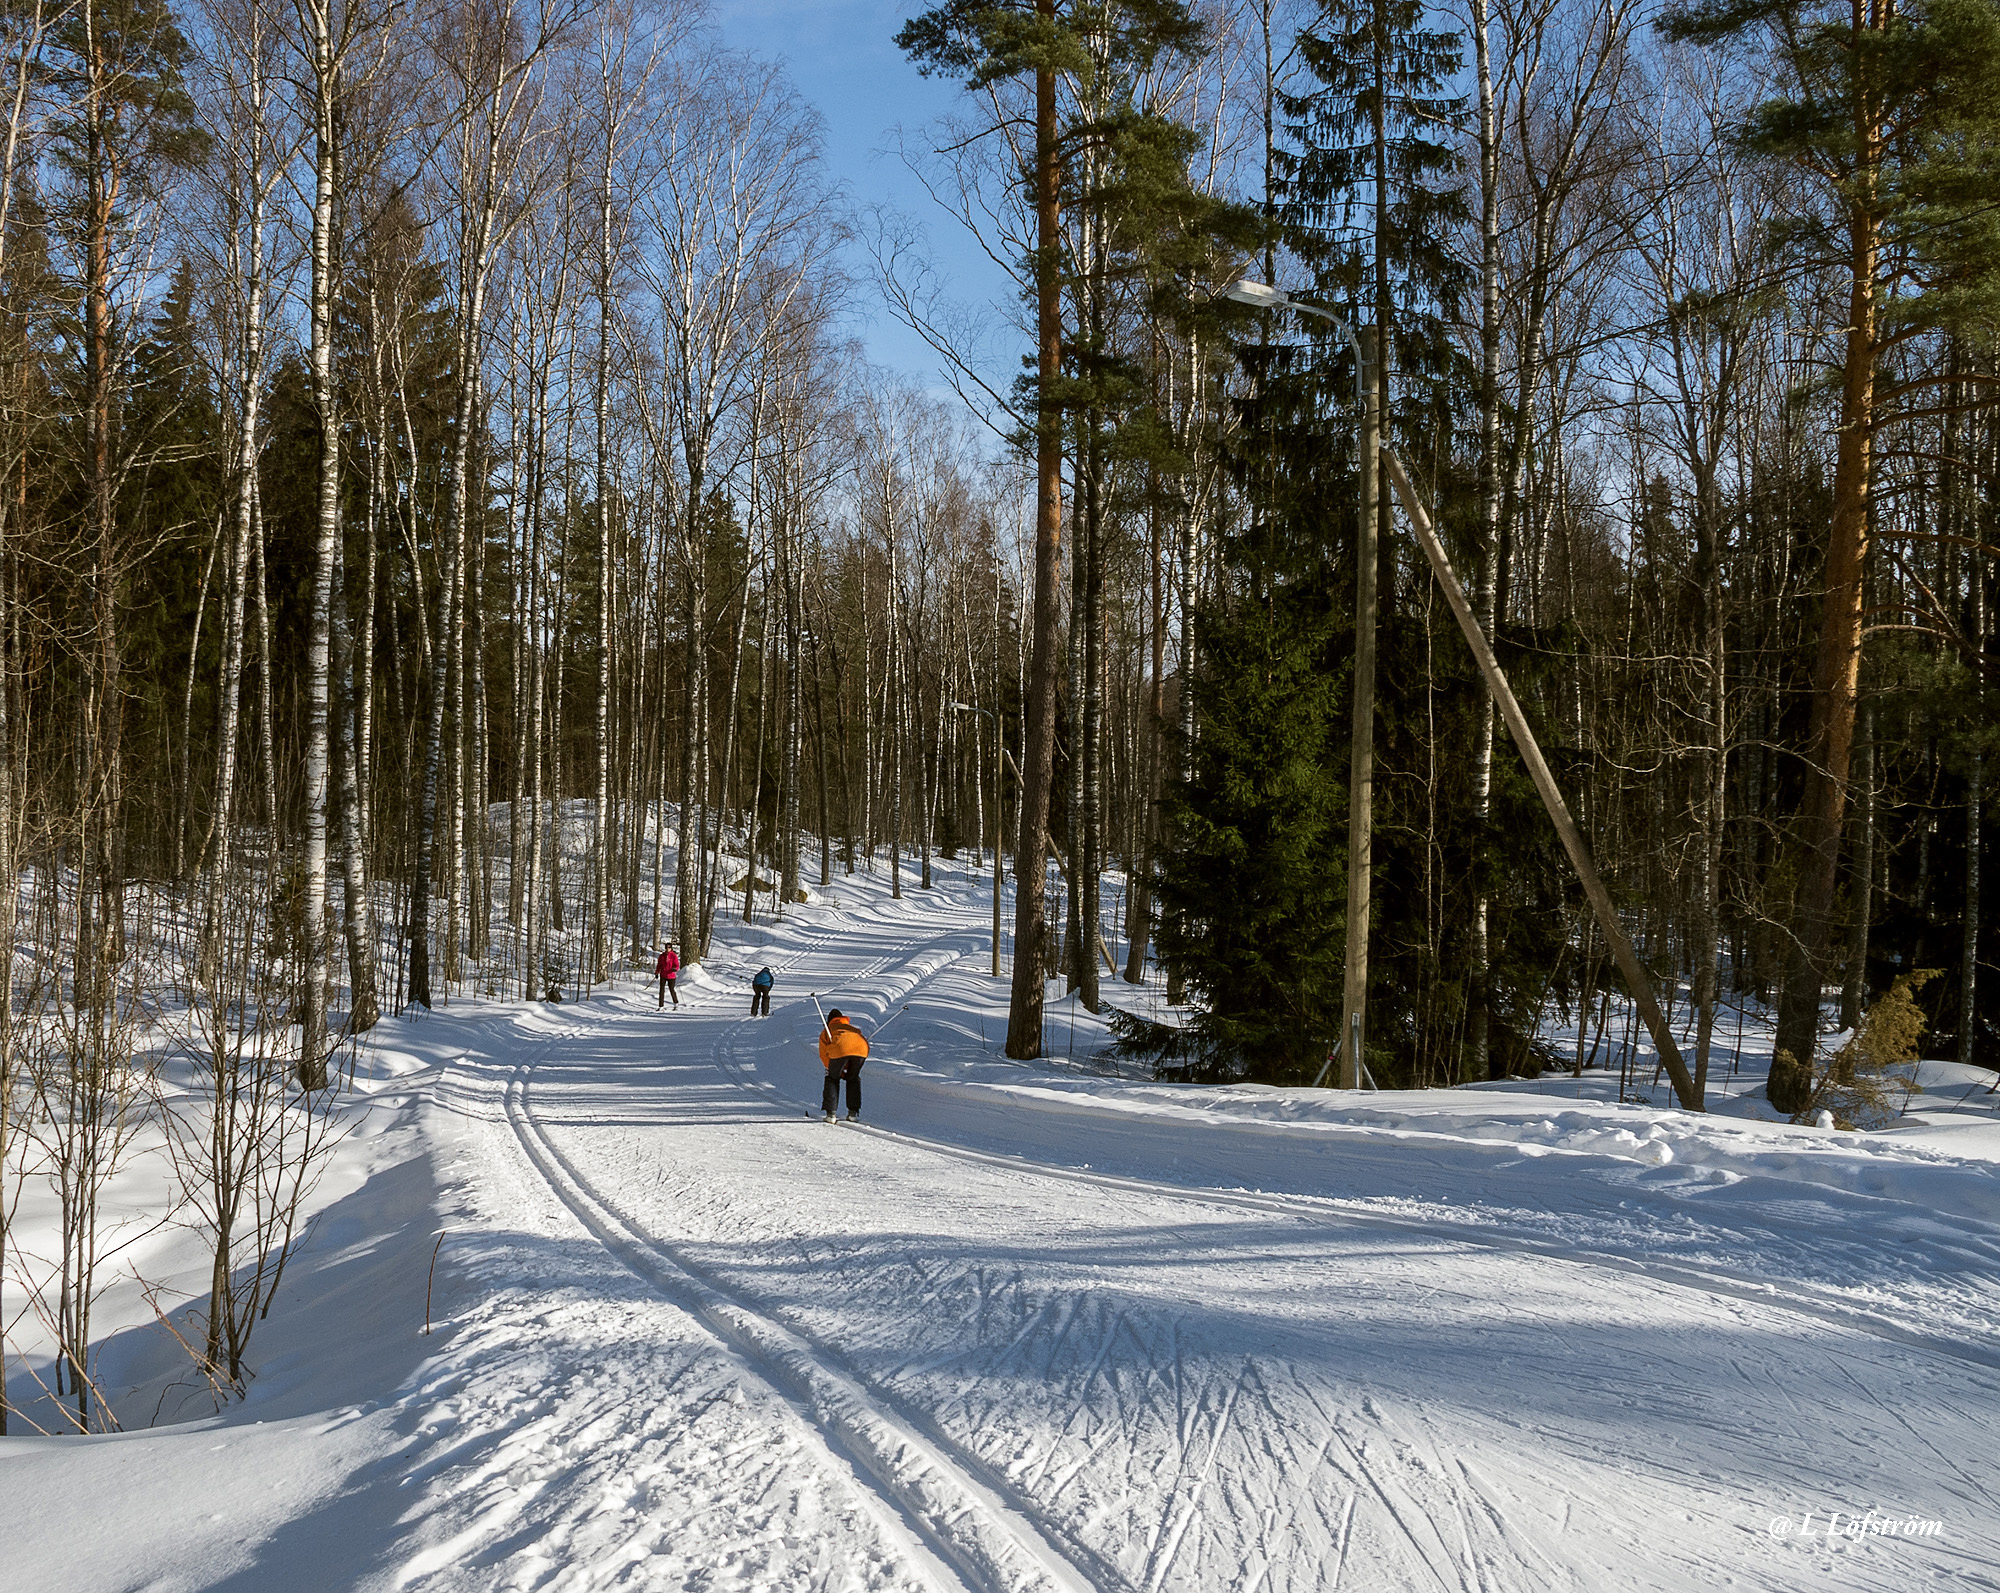 Landscapes-Joy of skiing